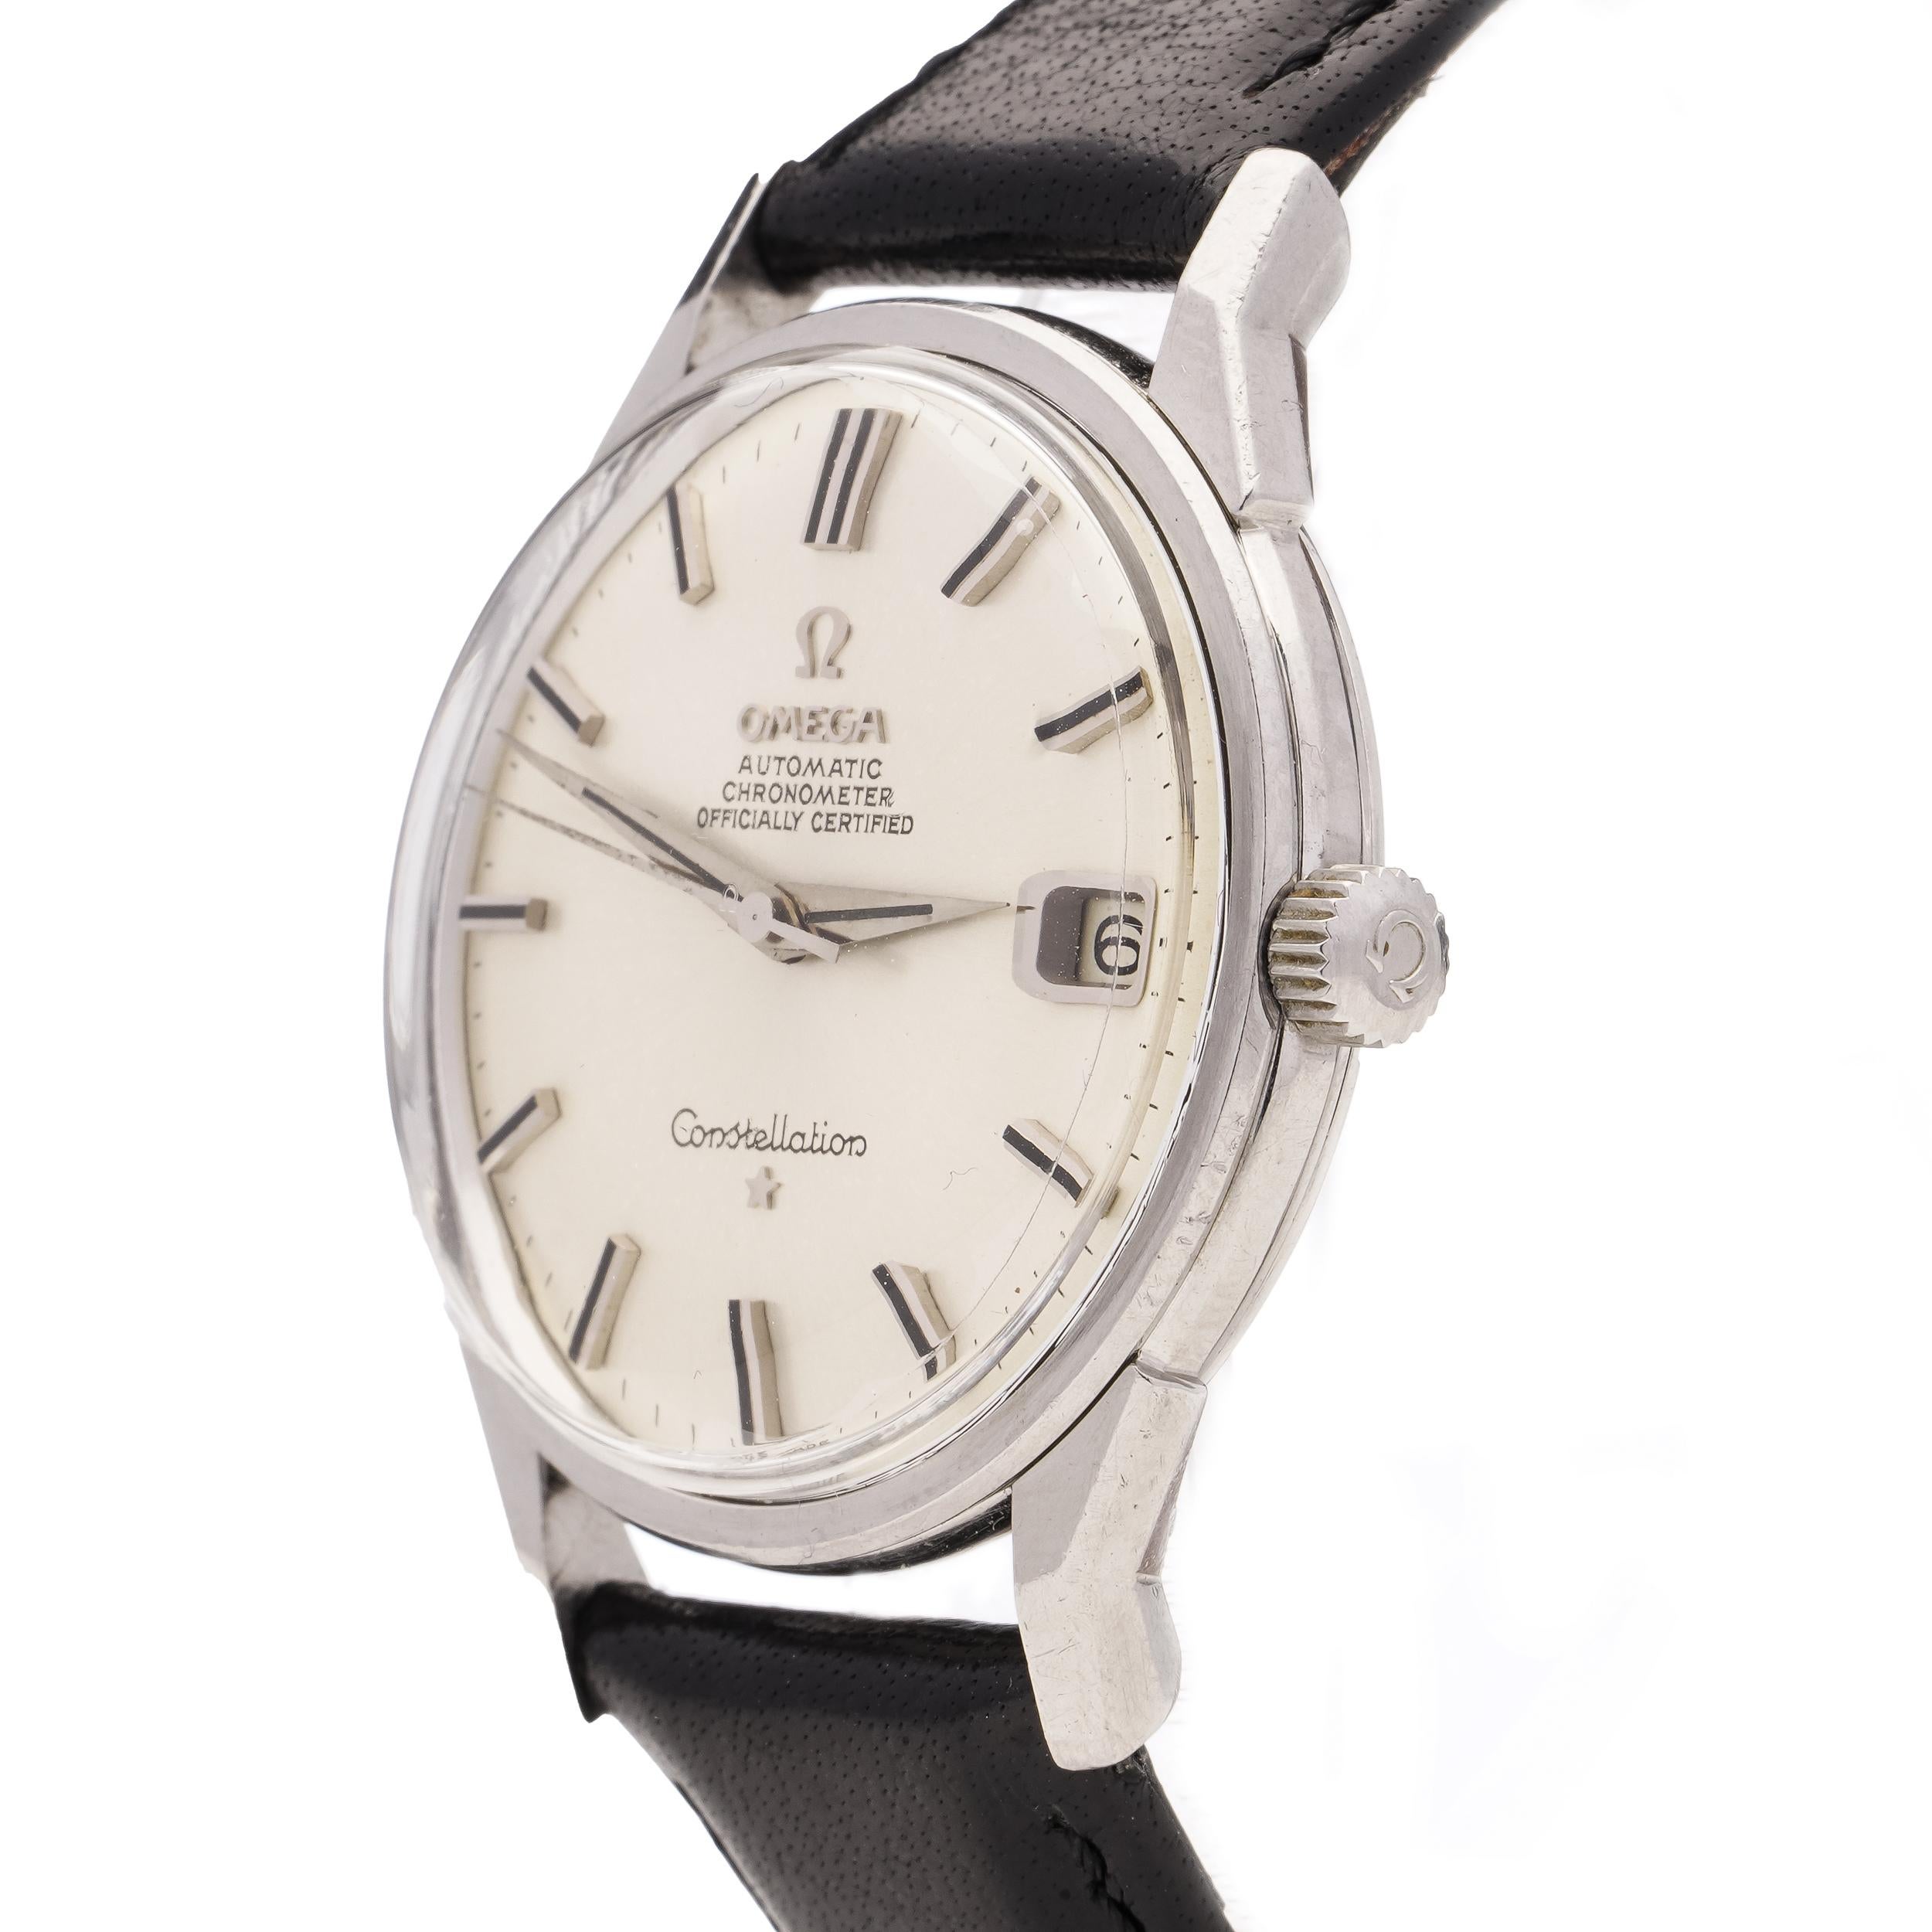 Men's Omega Vintage Constellation Automatic Chronometer men's wristwatch